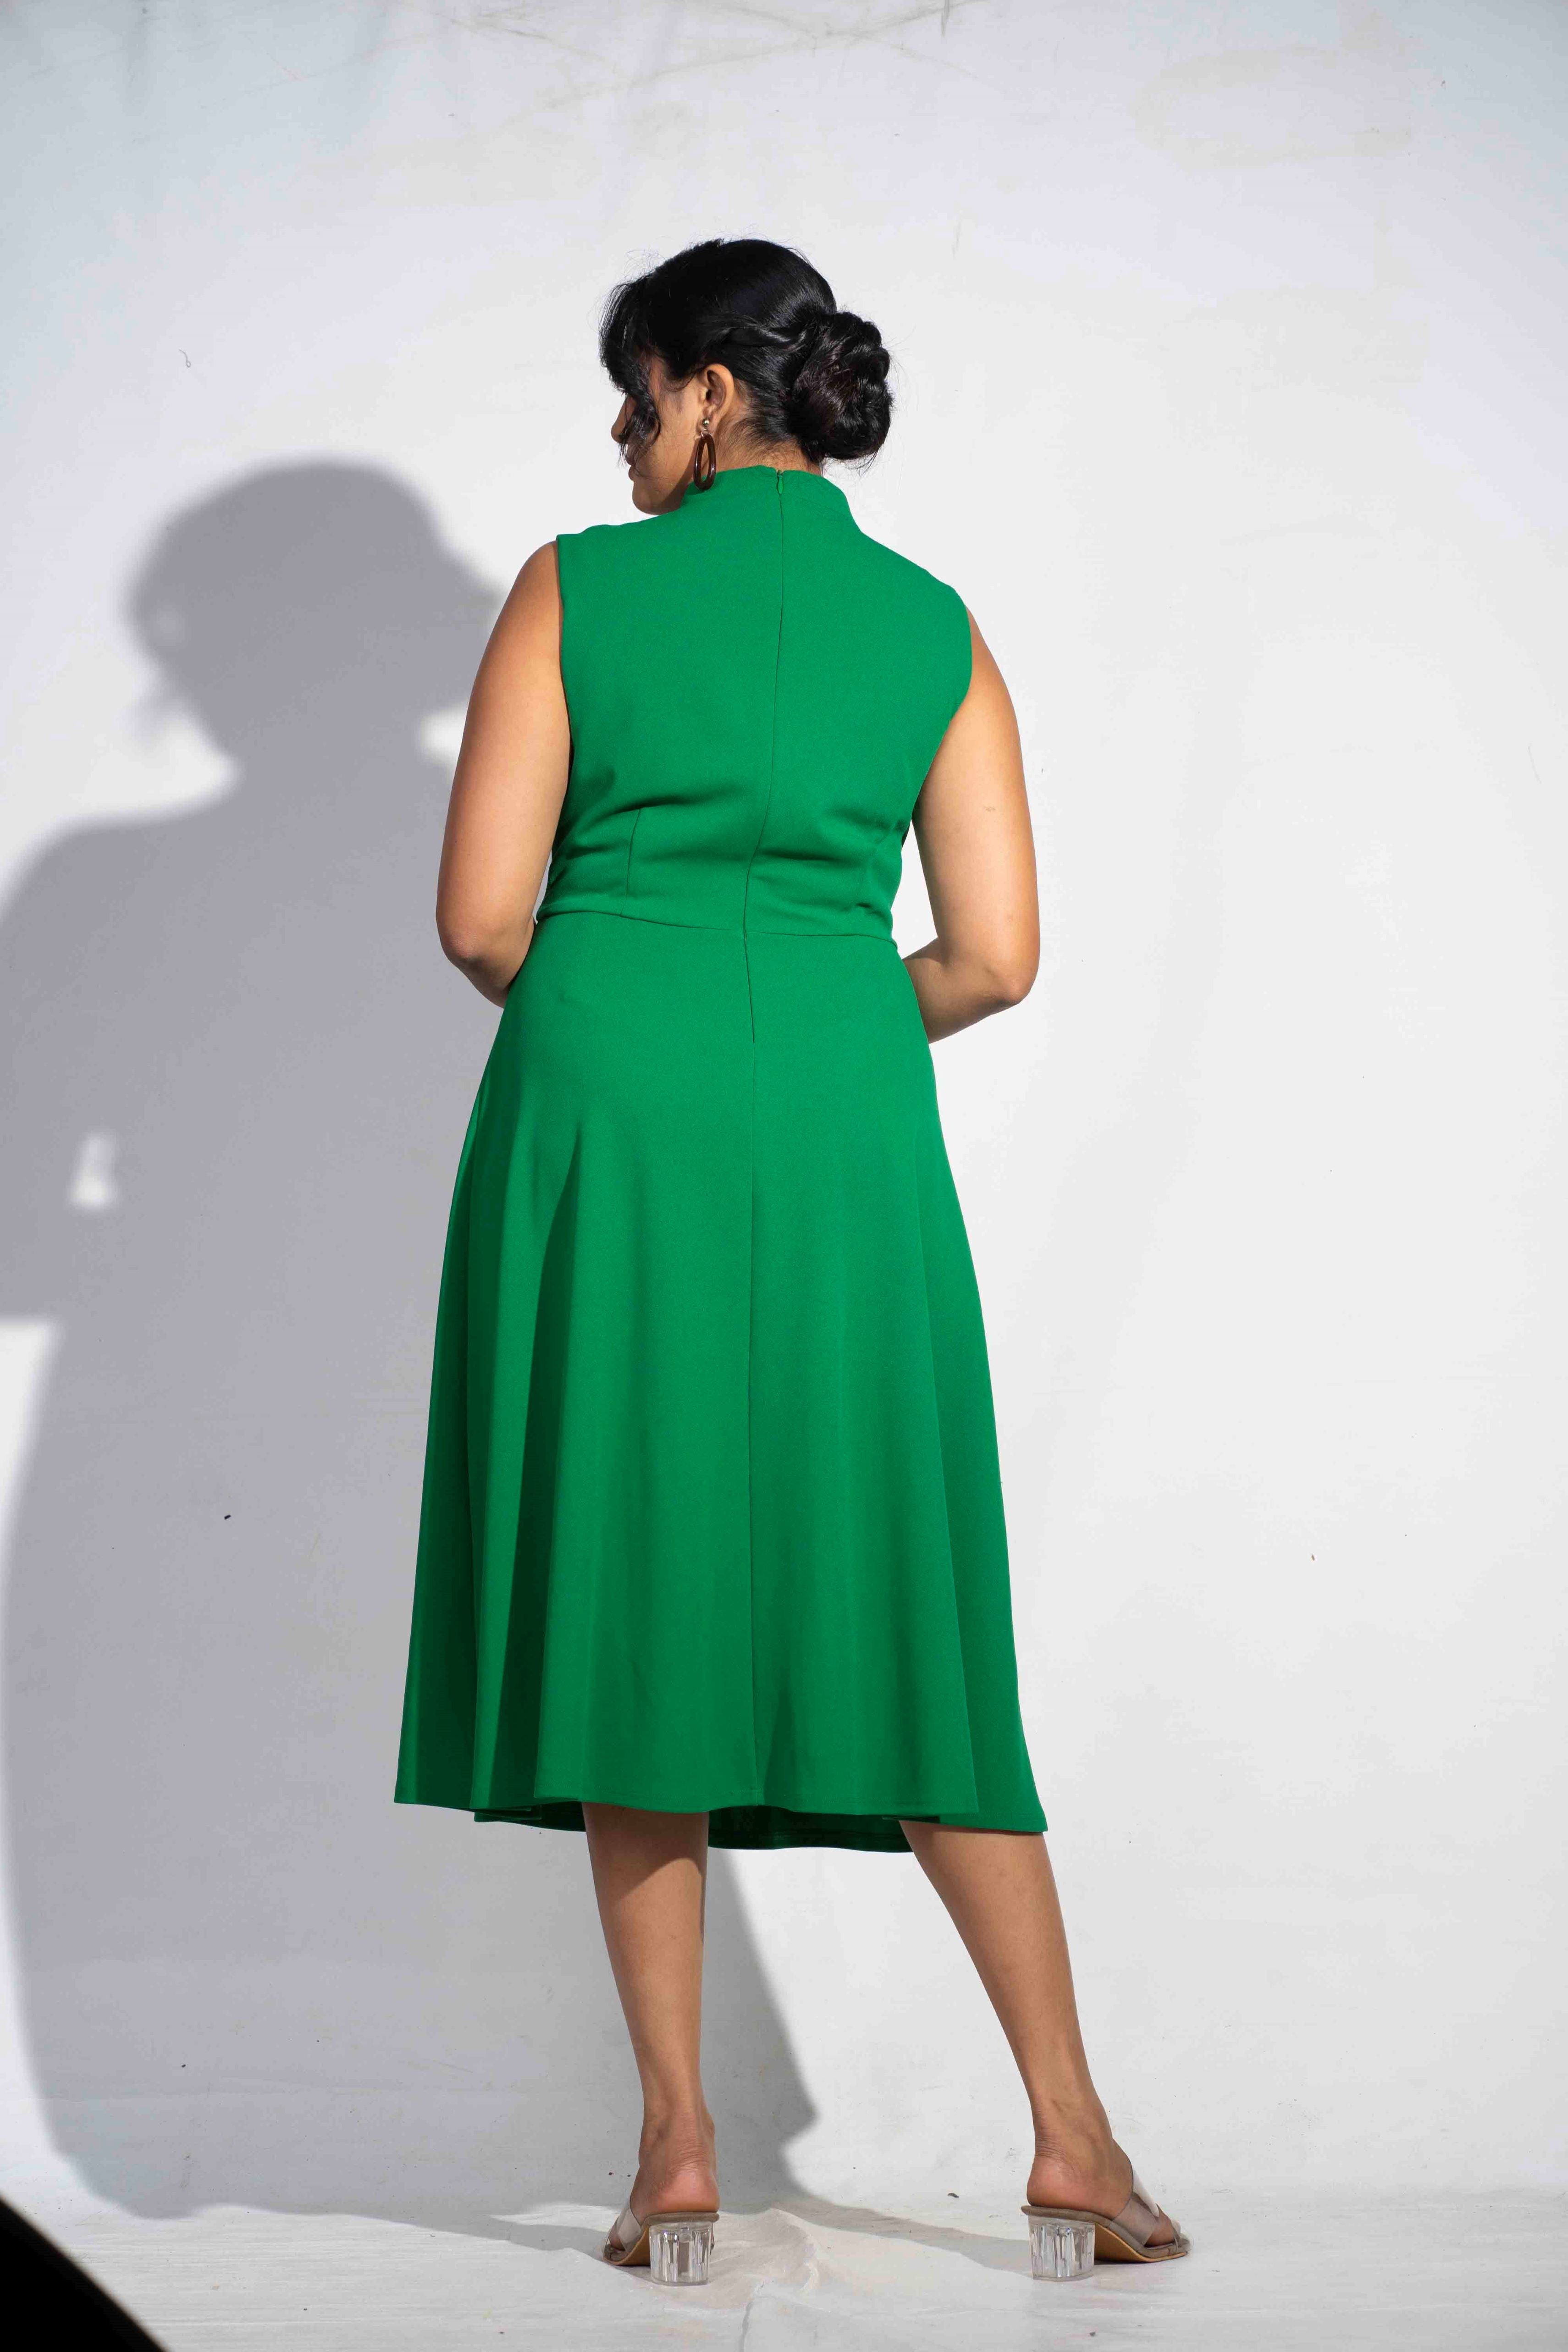 Green Tourmaline Tie Neck Dress - Avirate Sri Lanka